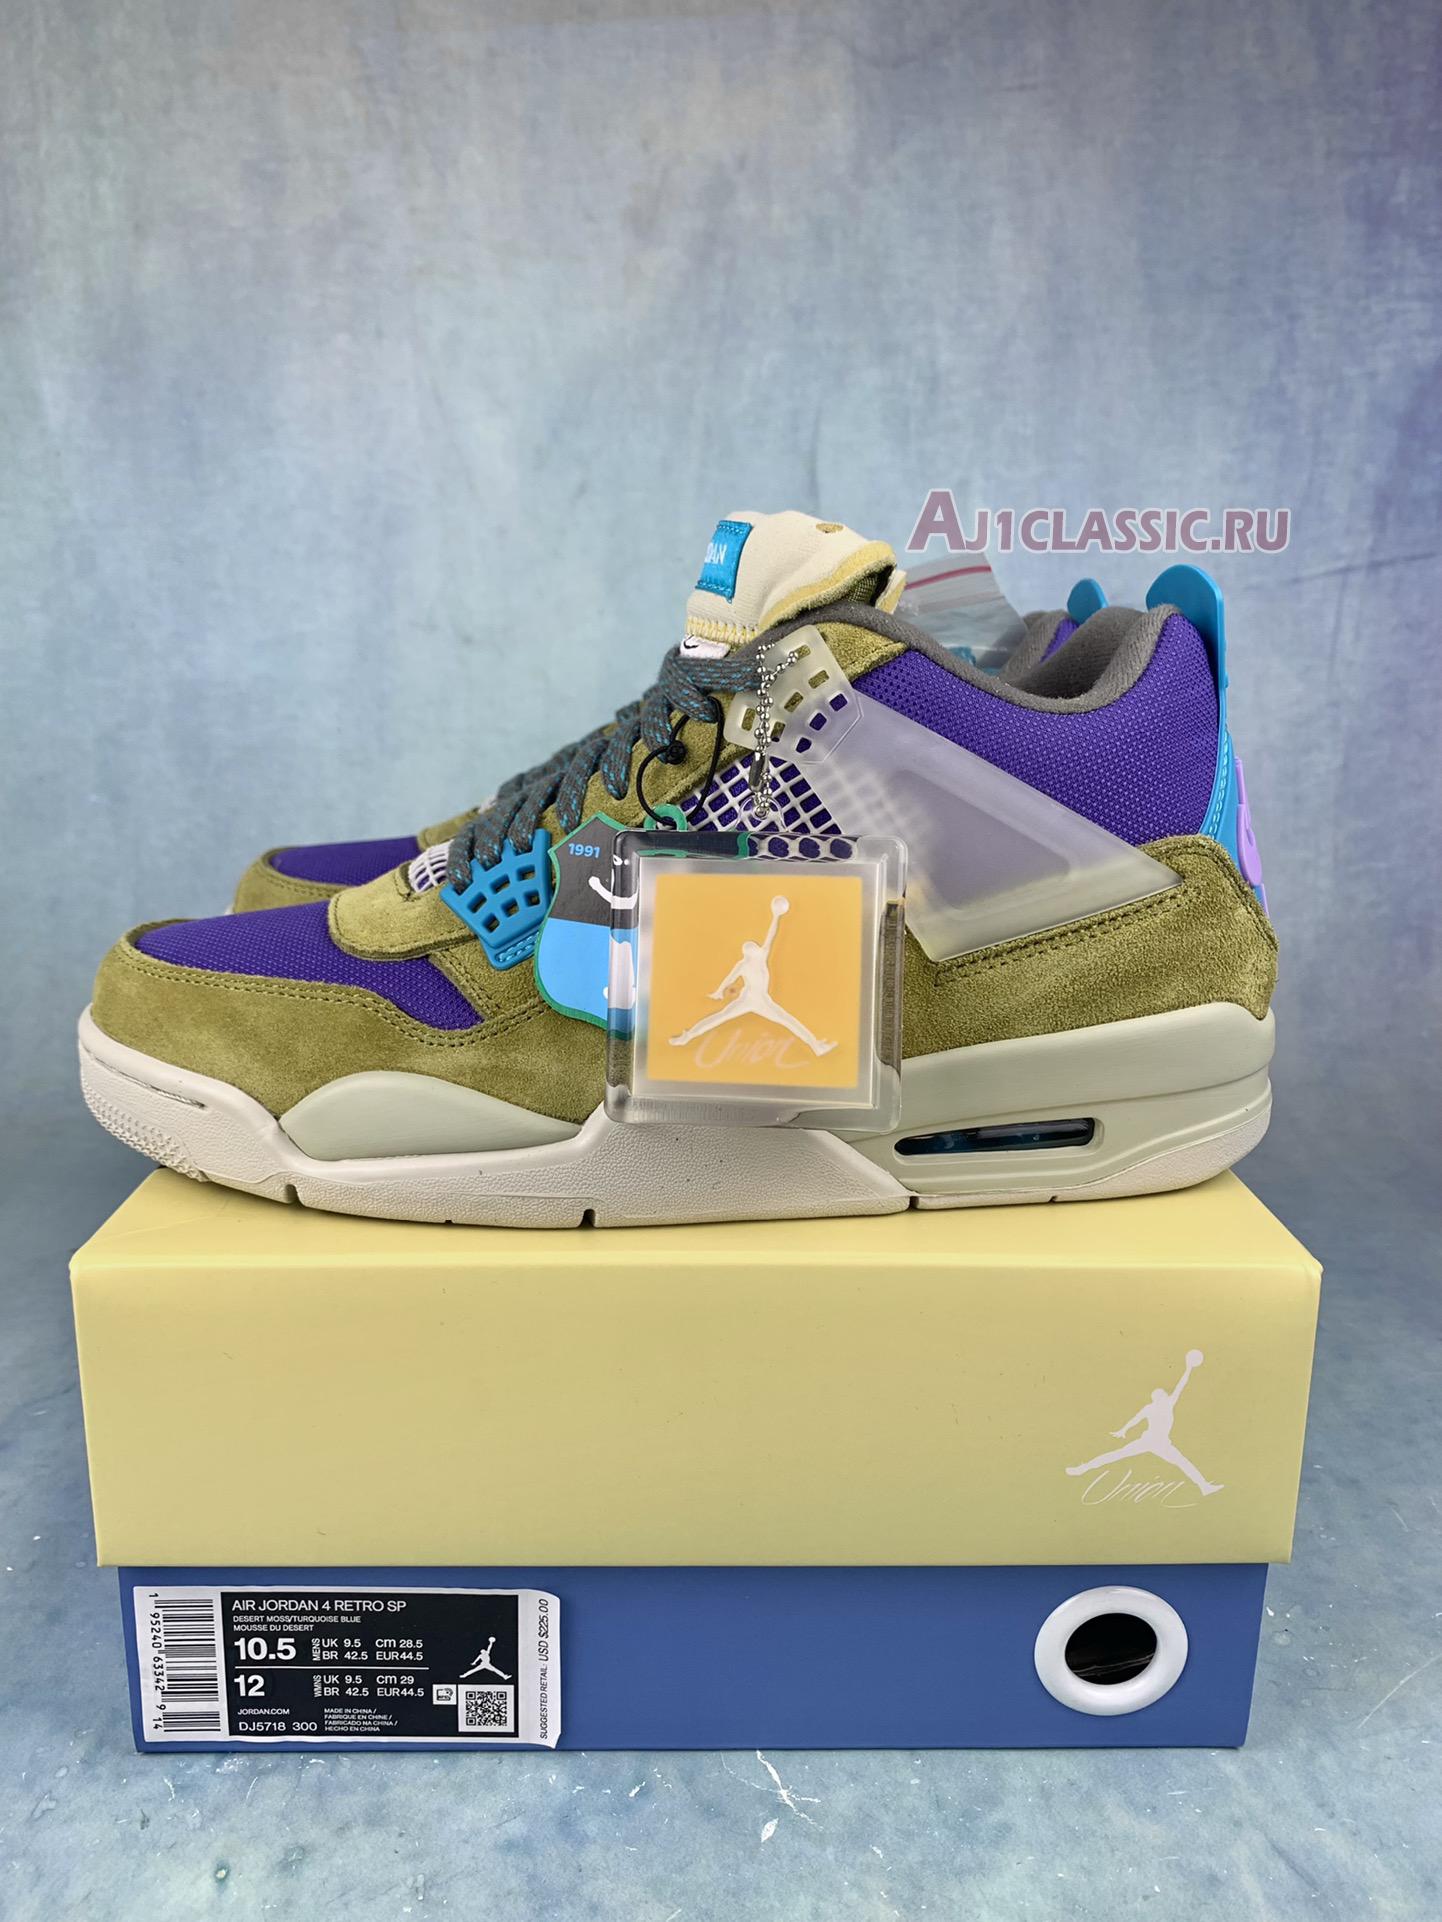 Union LA x Air Jordan 4 Retro Desert Moss DJ5718-300-2 Desert Moss/Turquoise Blue-Dark Iris Sneakers